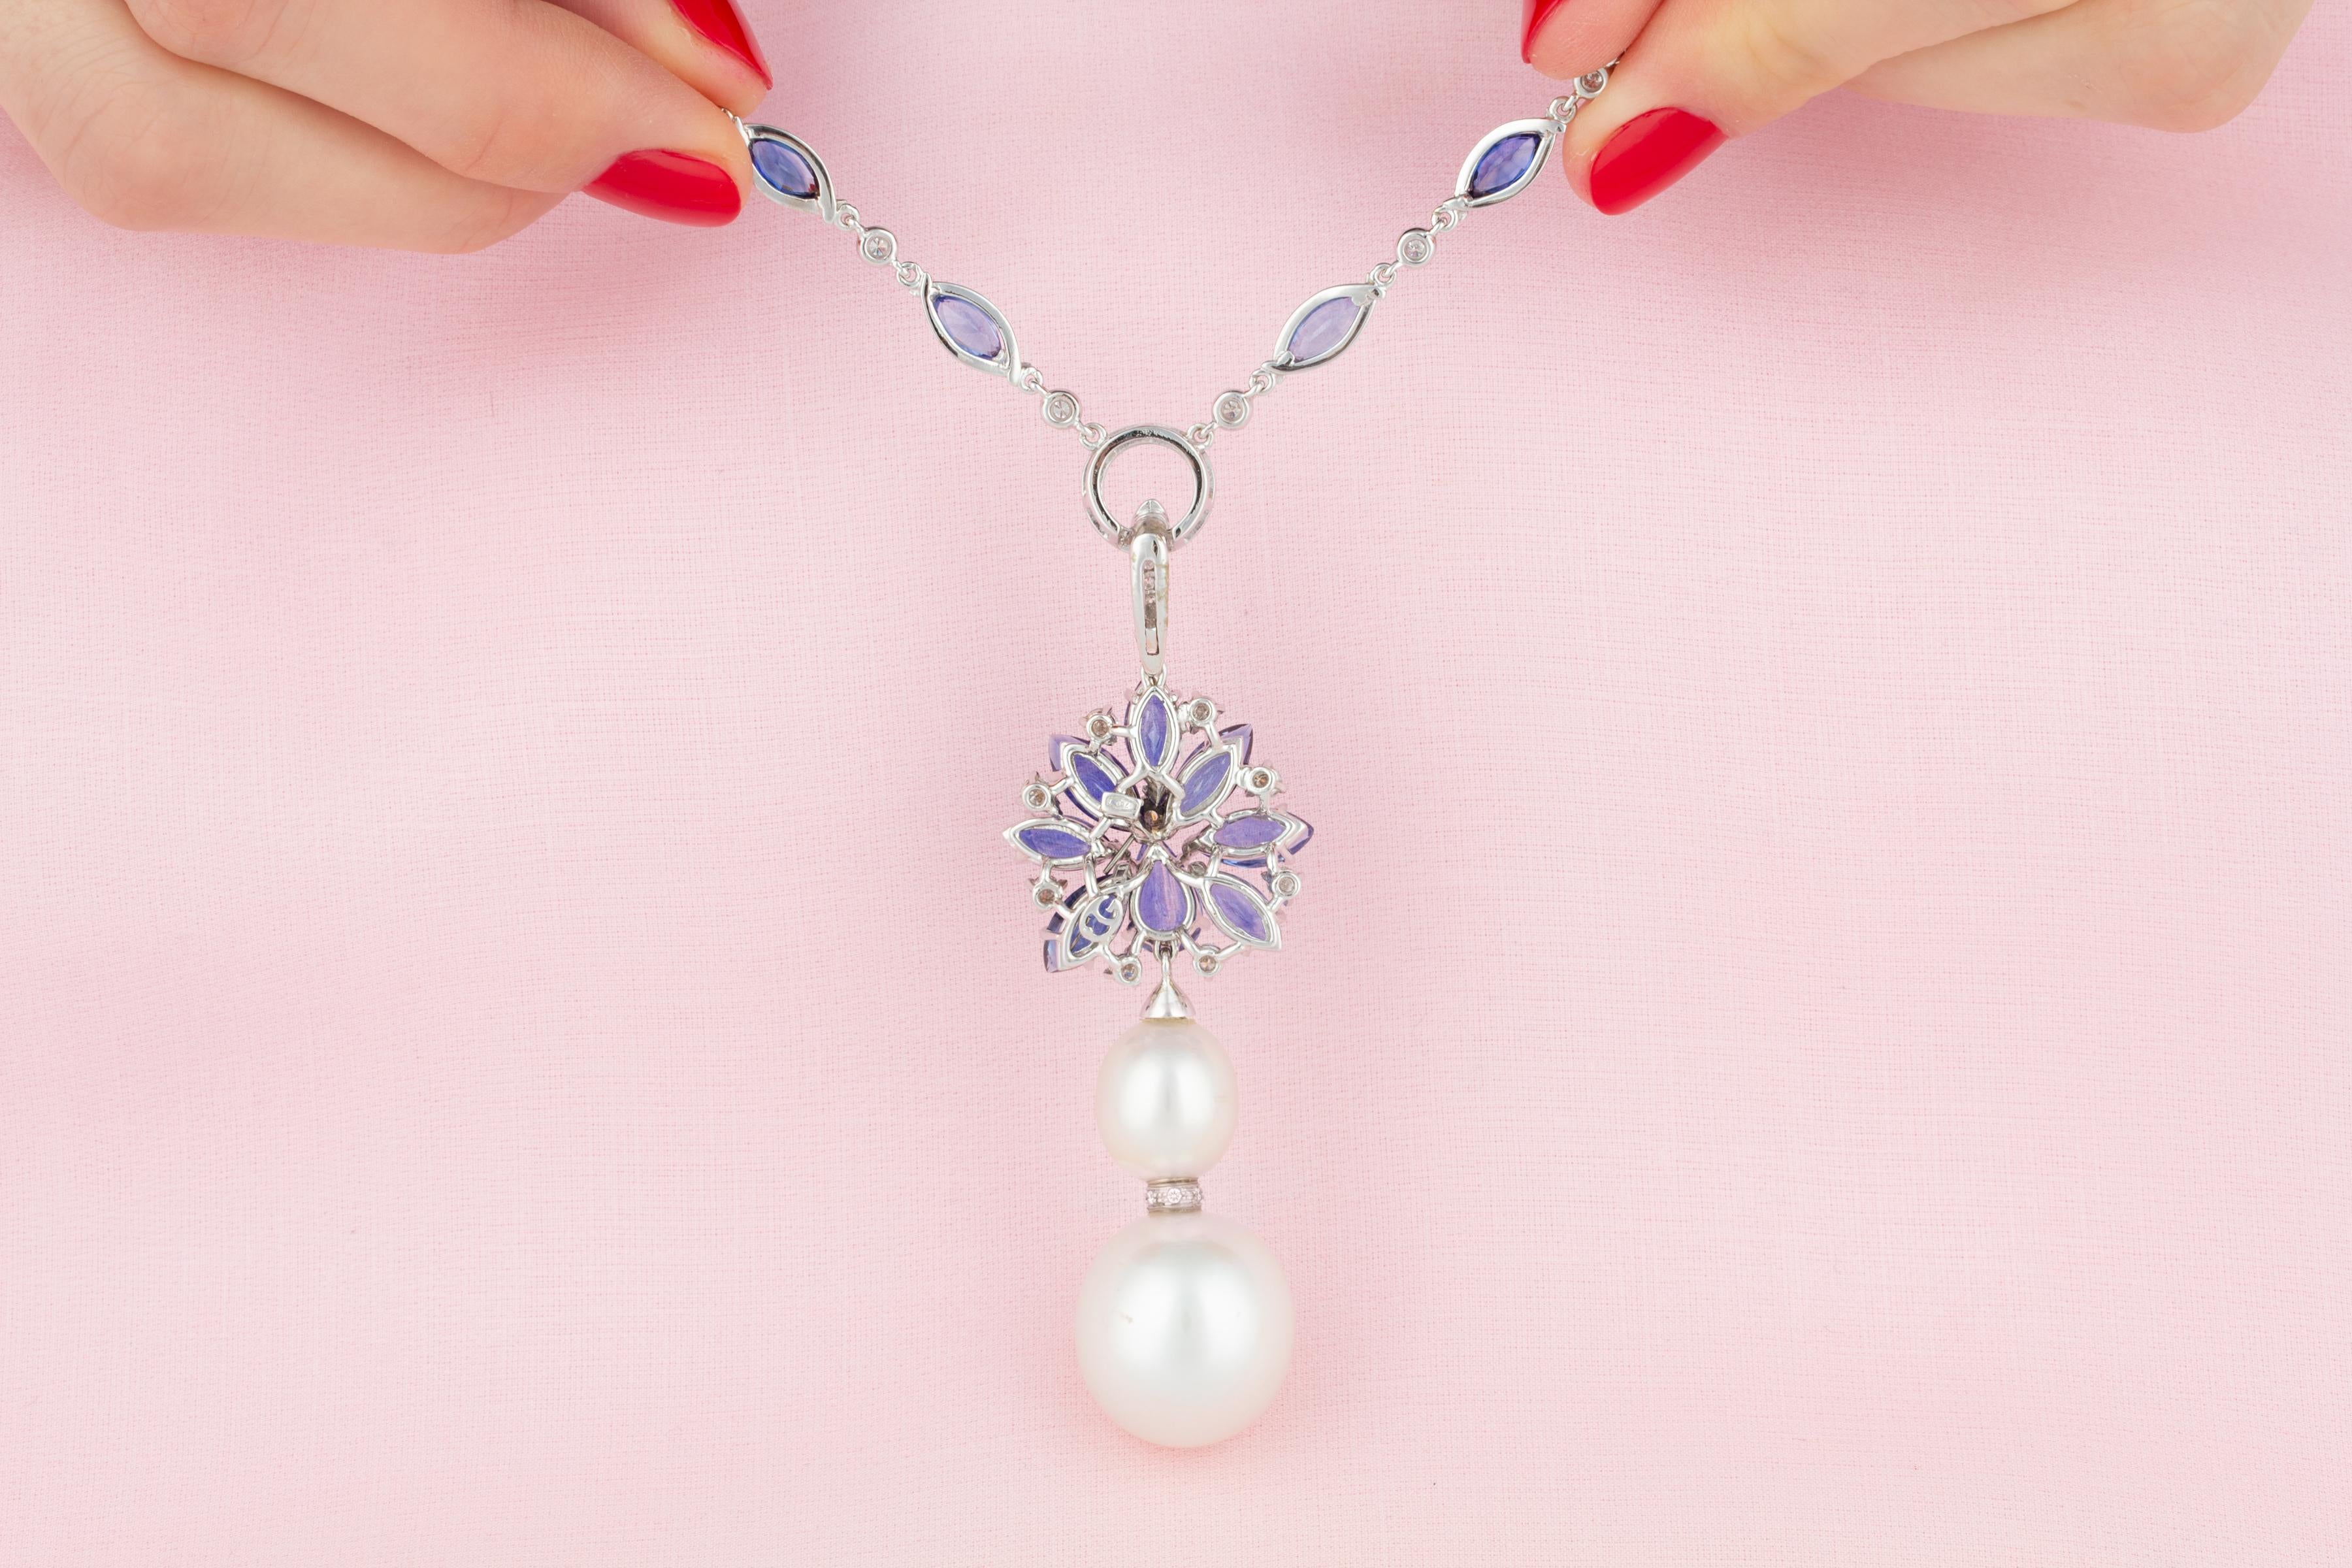 Brilliant Cut Ella Gafter Blue Sapphire Diamond Pendant Necklace  For Sale